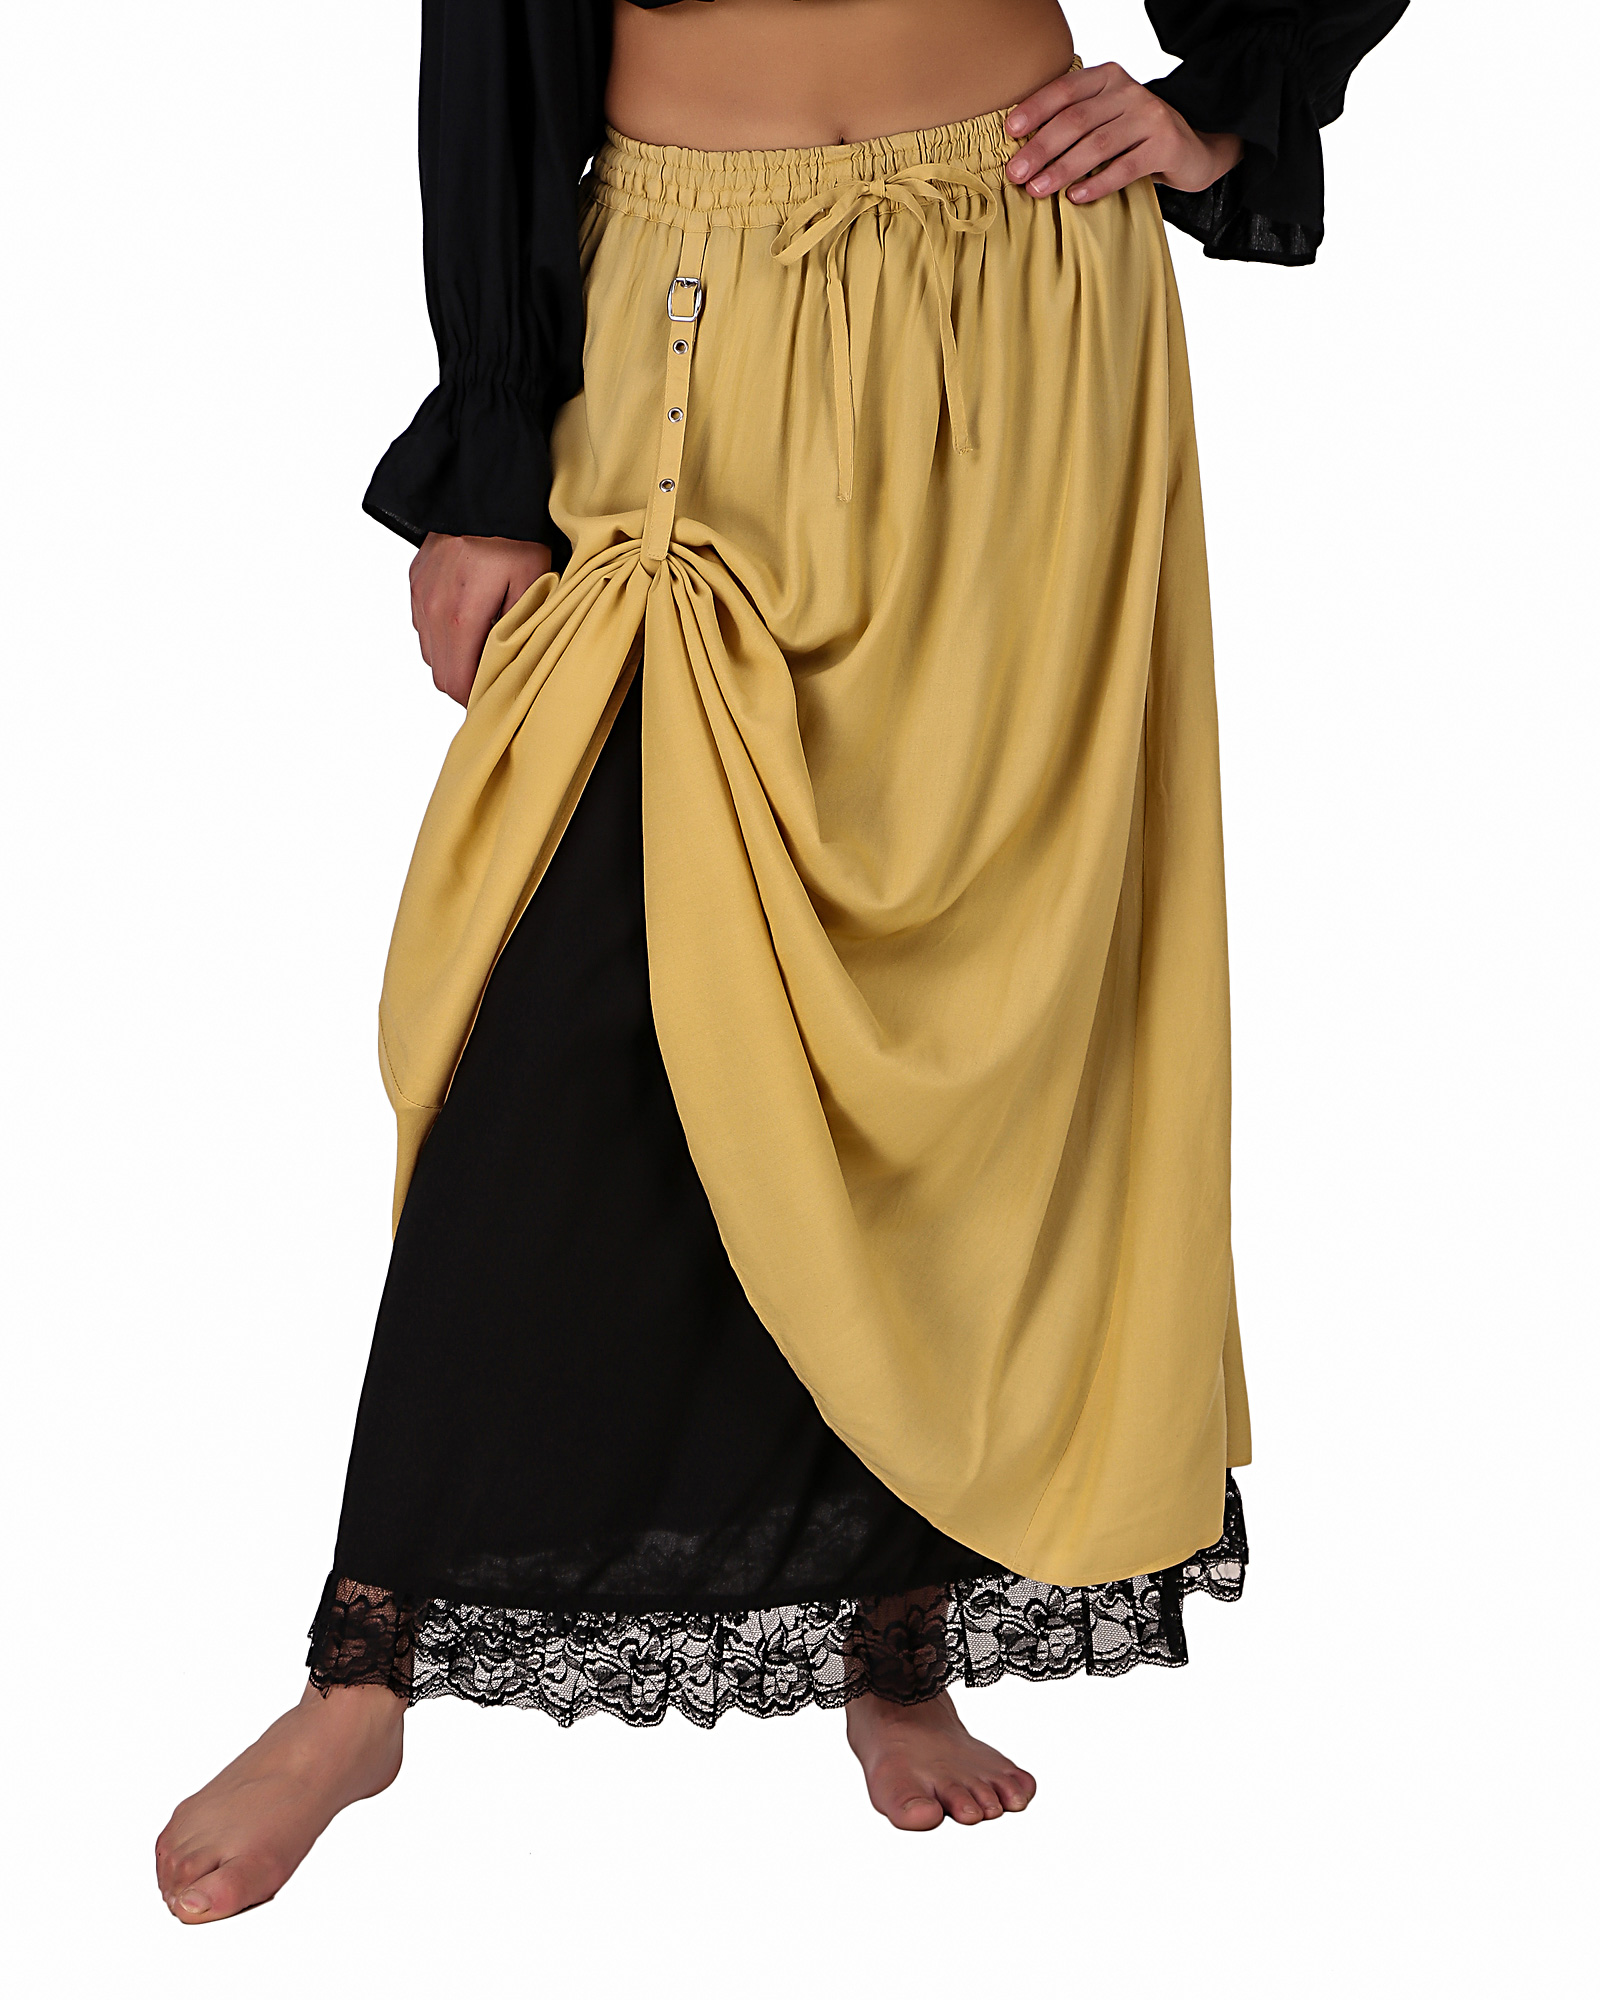 Double-Layer Renaissance LARP Skirt - Click Image to Close